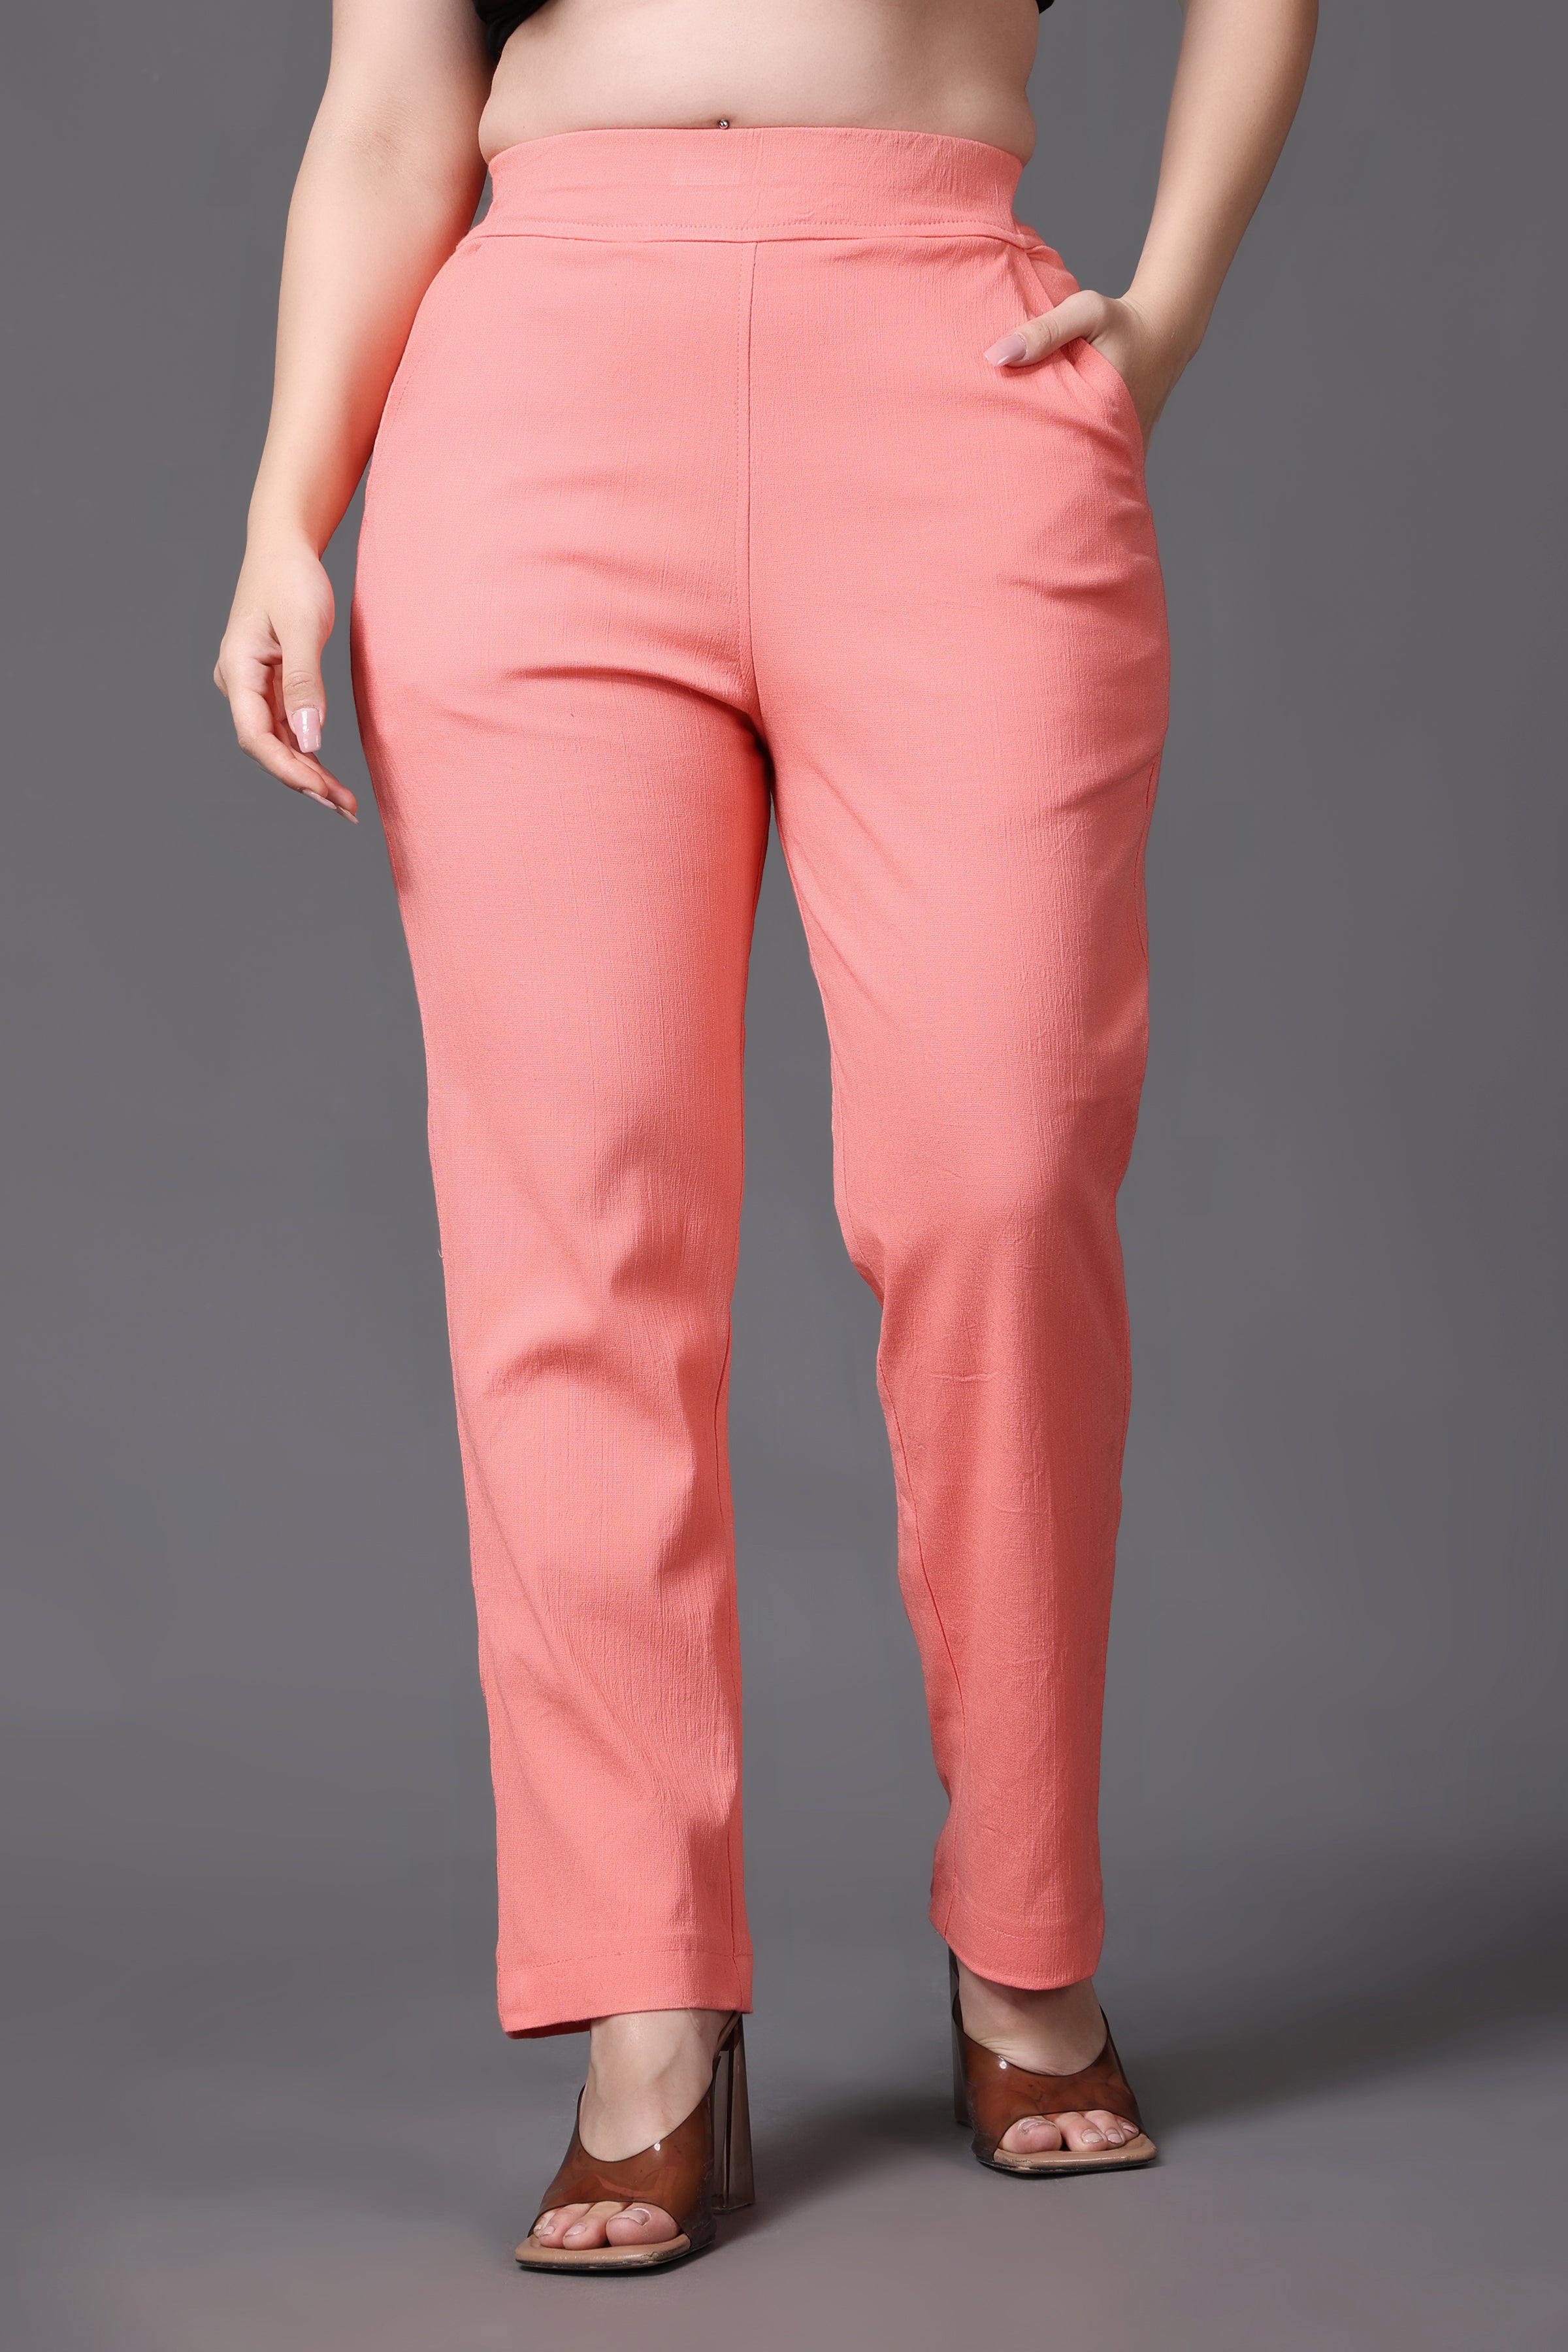 Adjustable 4way Lryca Indian formal pant are available #mensfashion #... |  TikTok